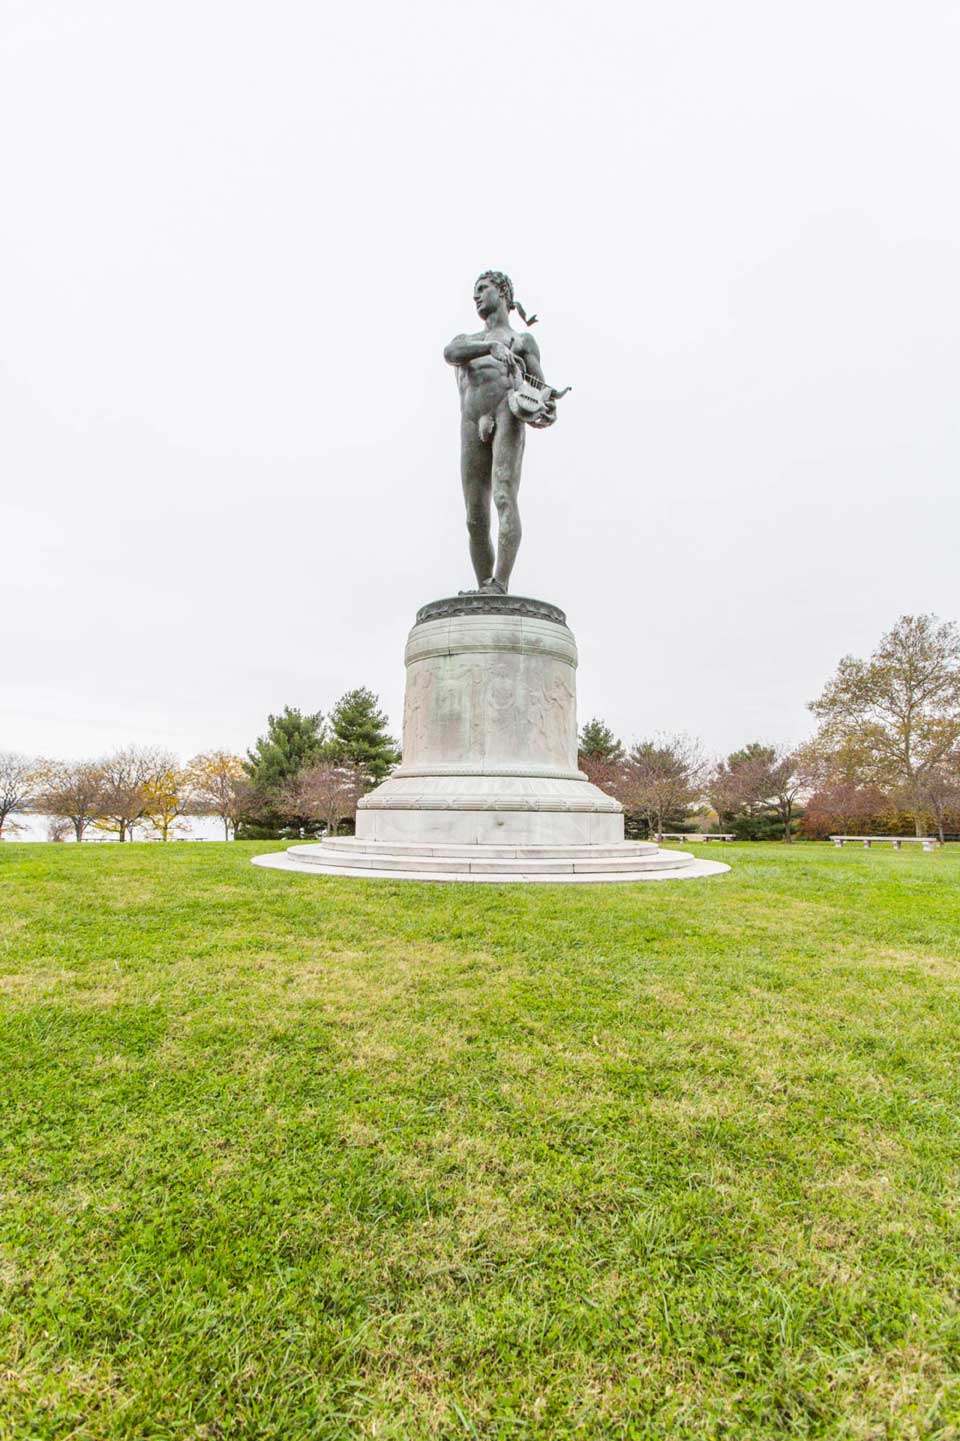 Statue in park in Locust Point, Baltimore, MD